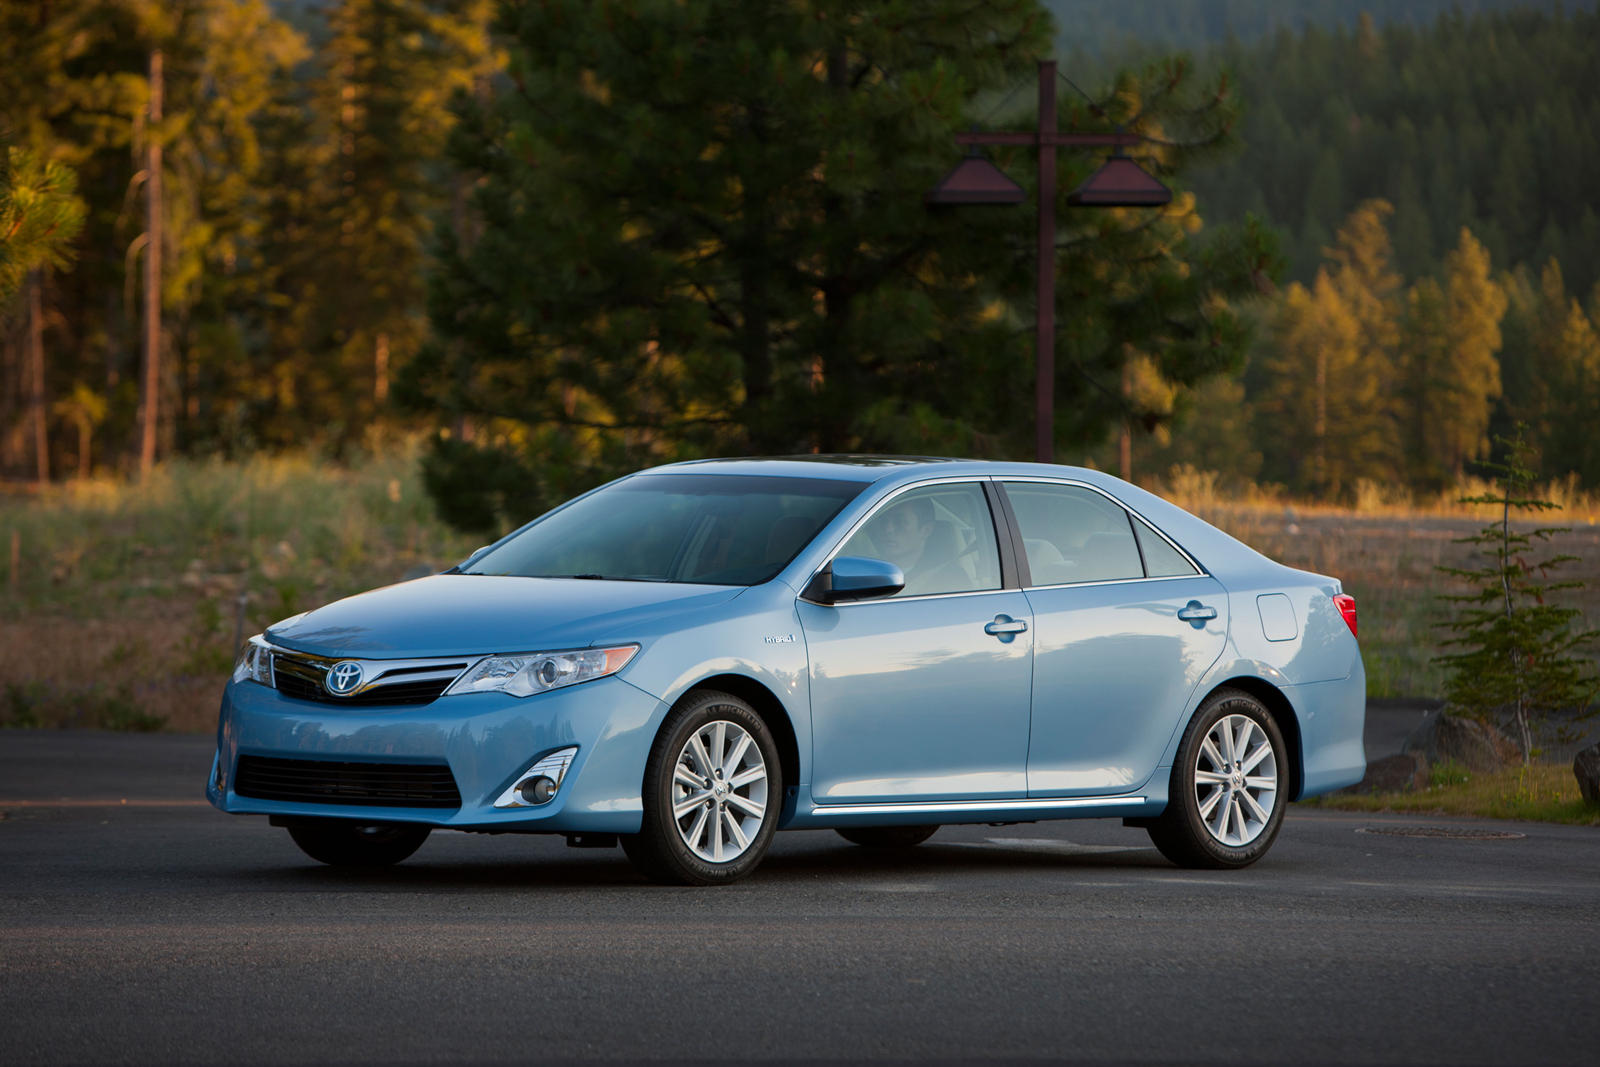 2013 Toyota Camry Hybrid: Review, Trims, Specs, Price, New Interior